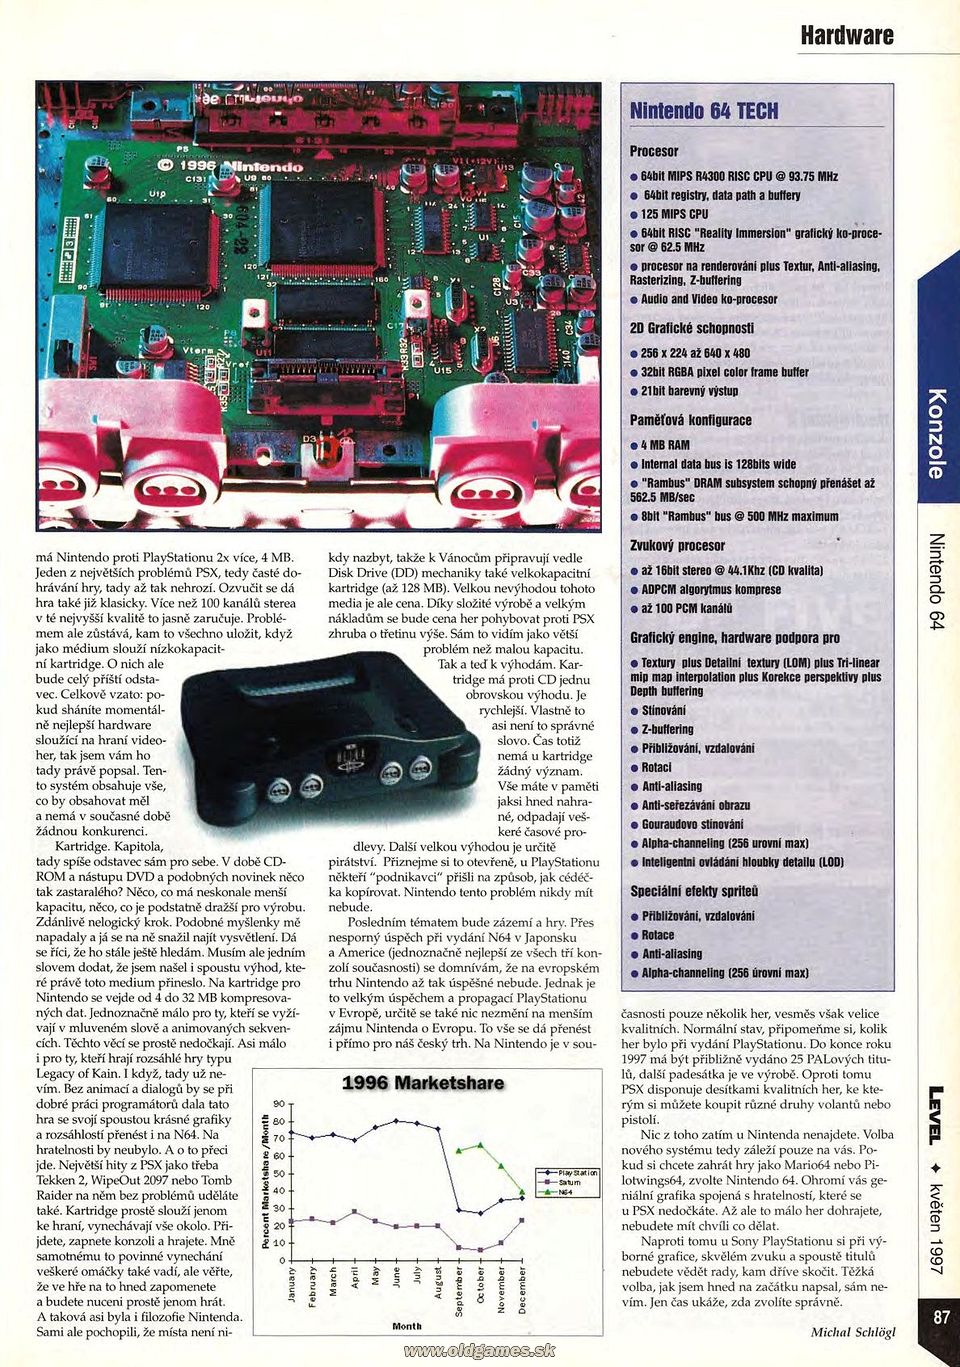 Hardware: Nintendo 64